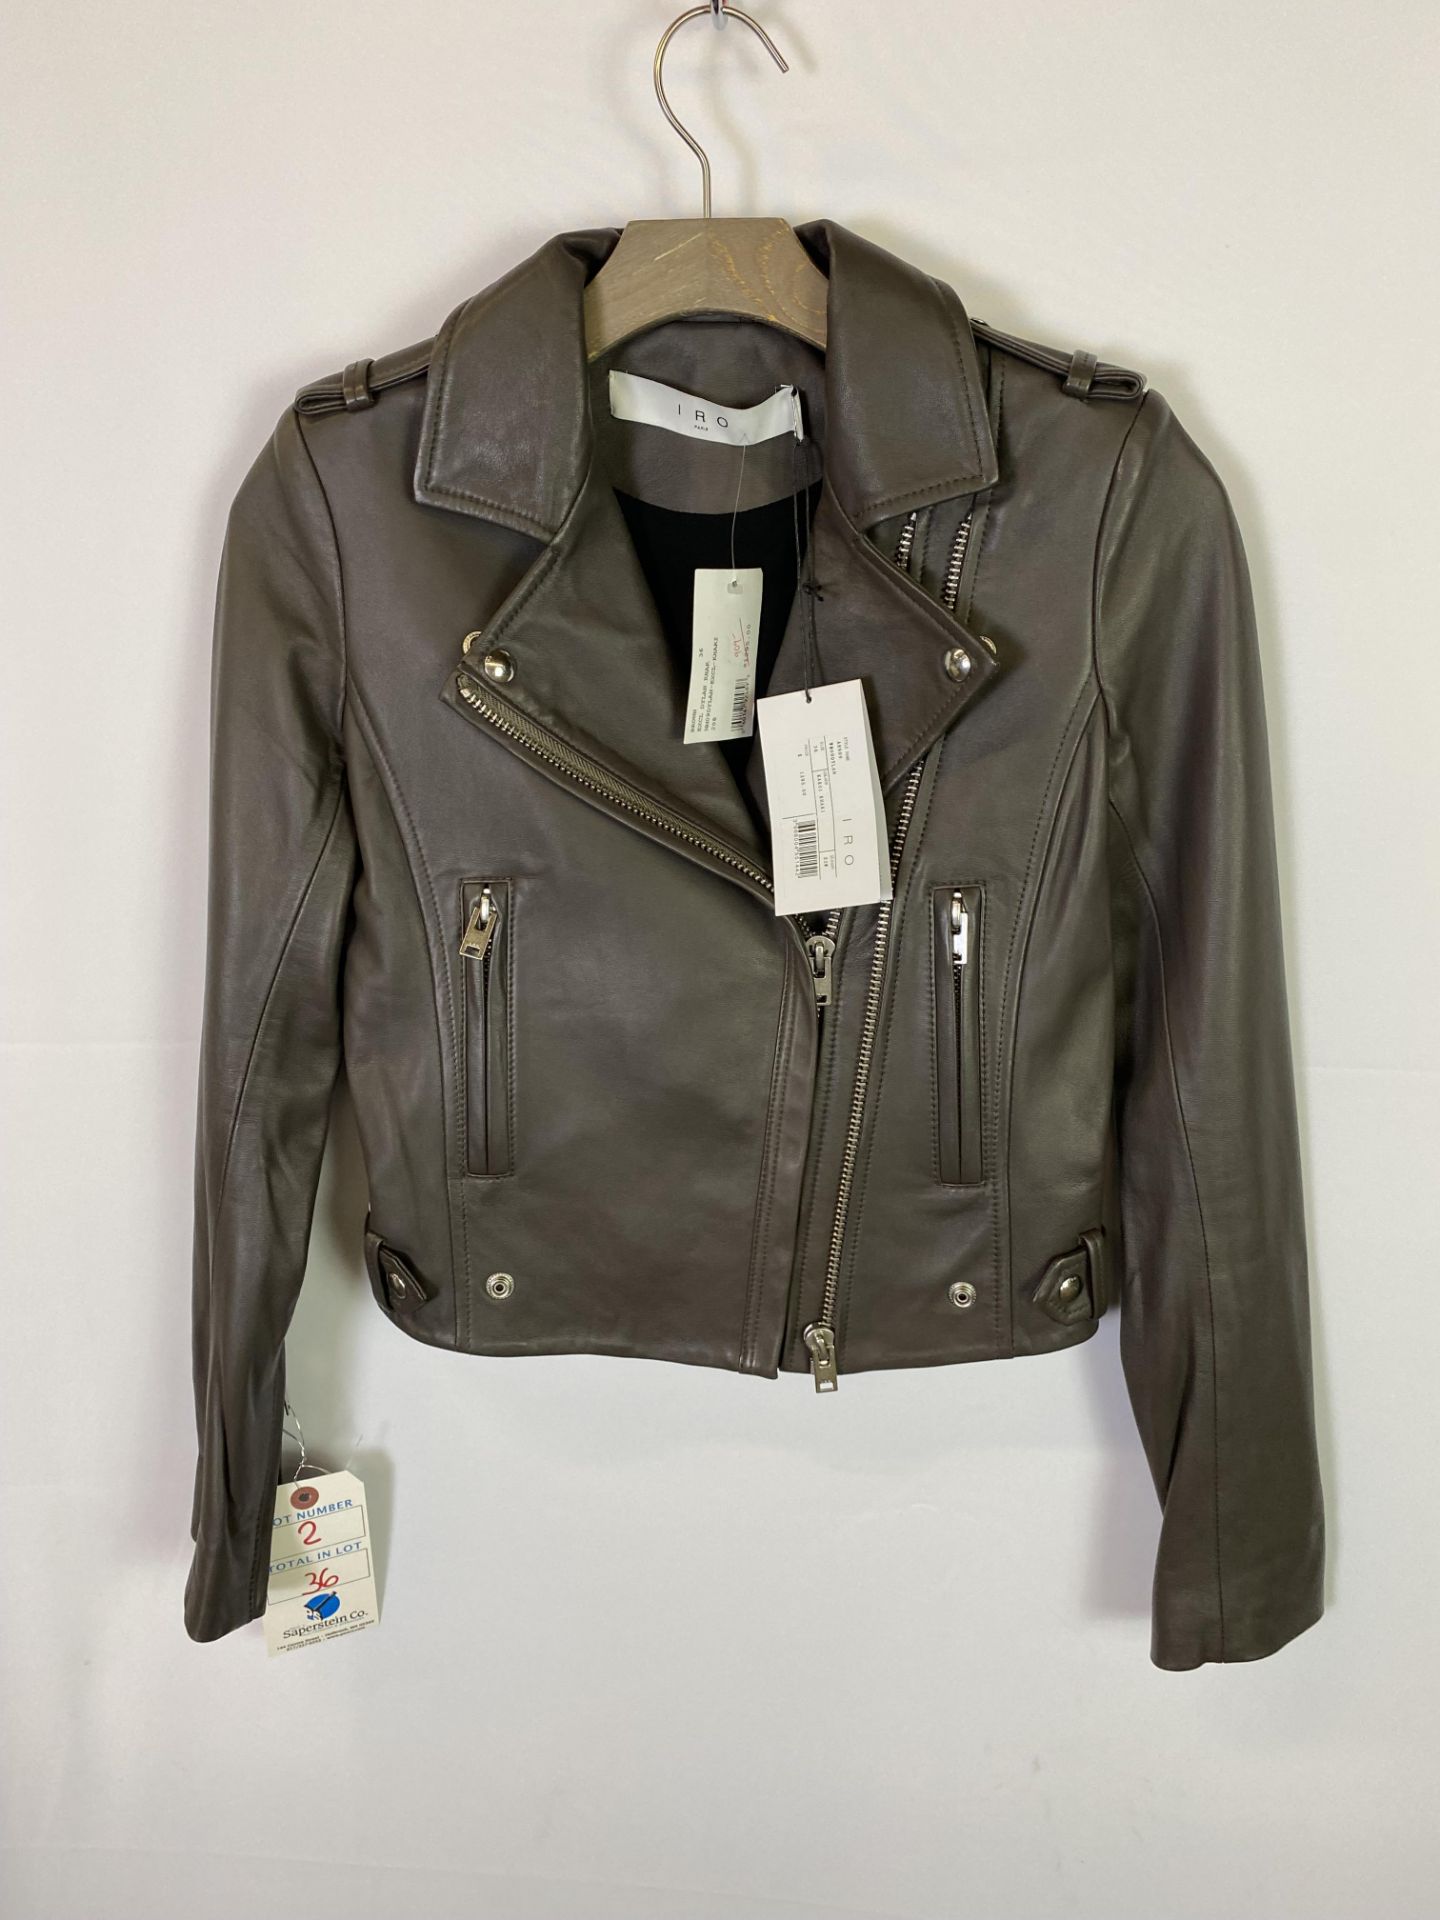 Iro Paris Brown Khaki Dylan "Leather" Jacket, Size: 36, Original Retail Price: $1295 (Marked down to